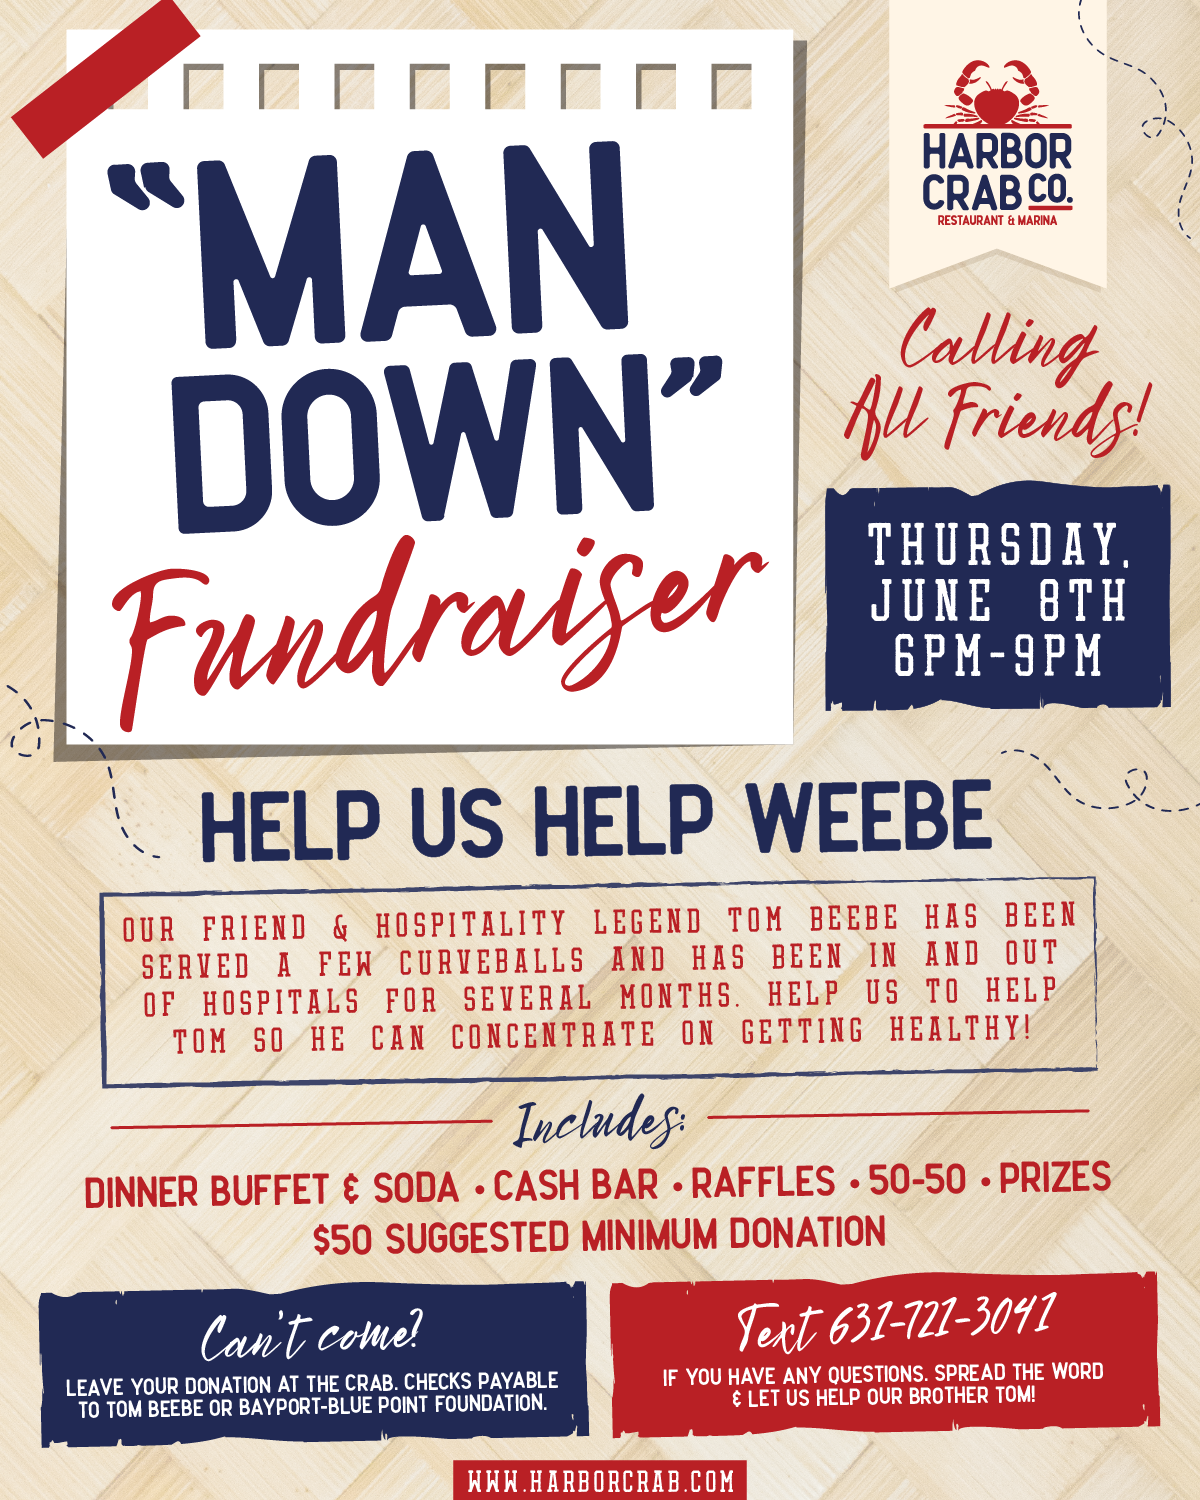 Man Down Fundraiser at Harbor Crab on June 8th at 6pm